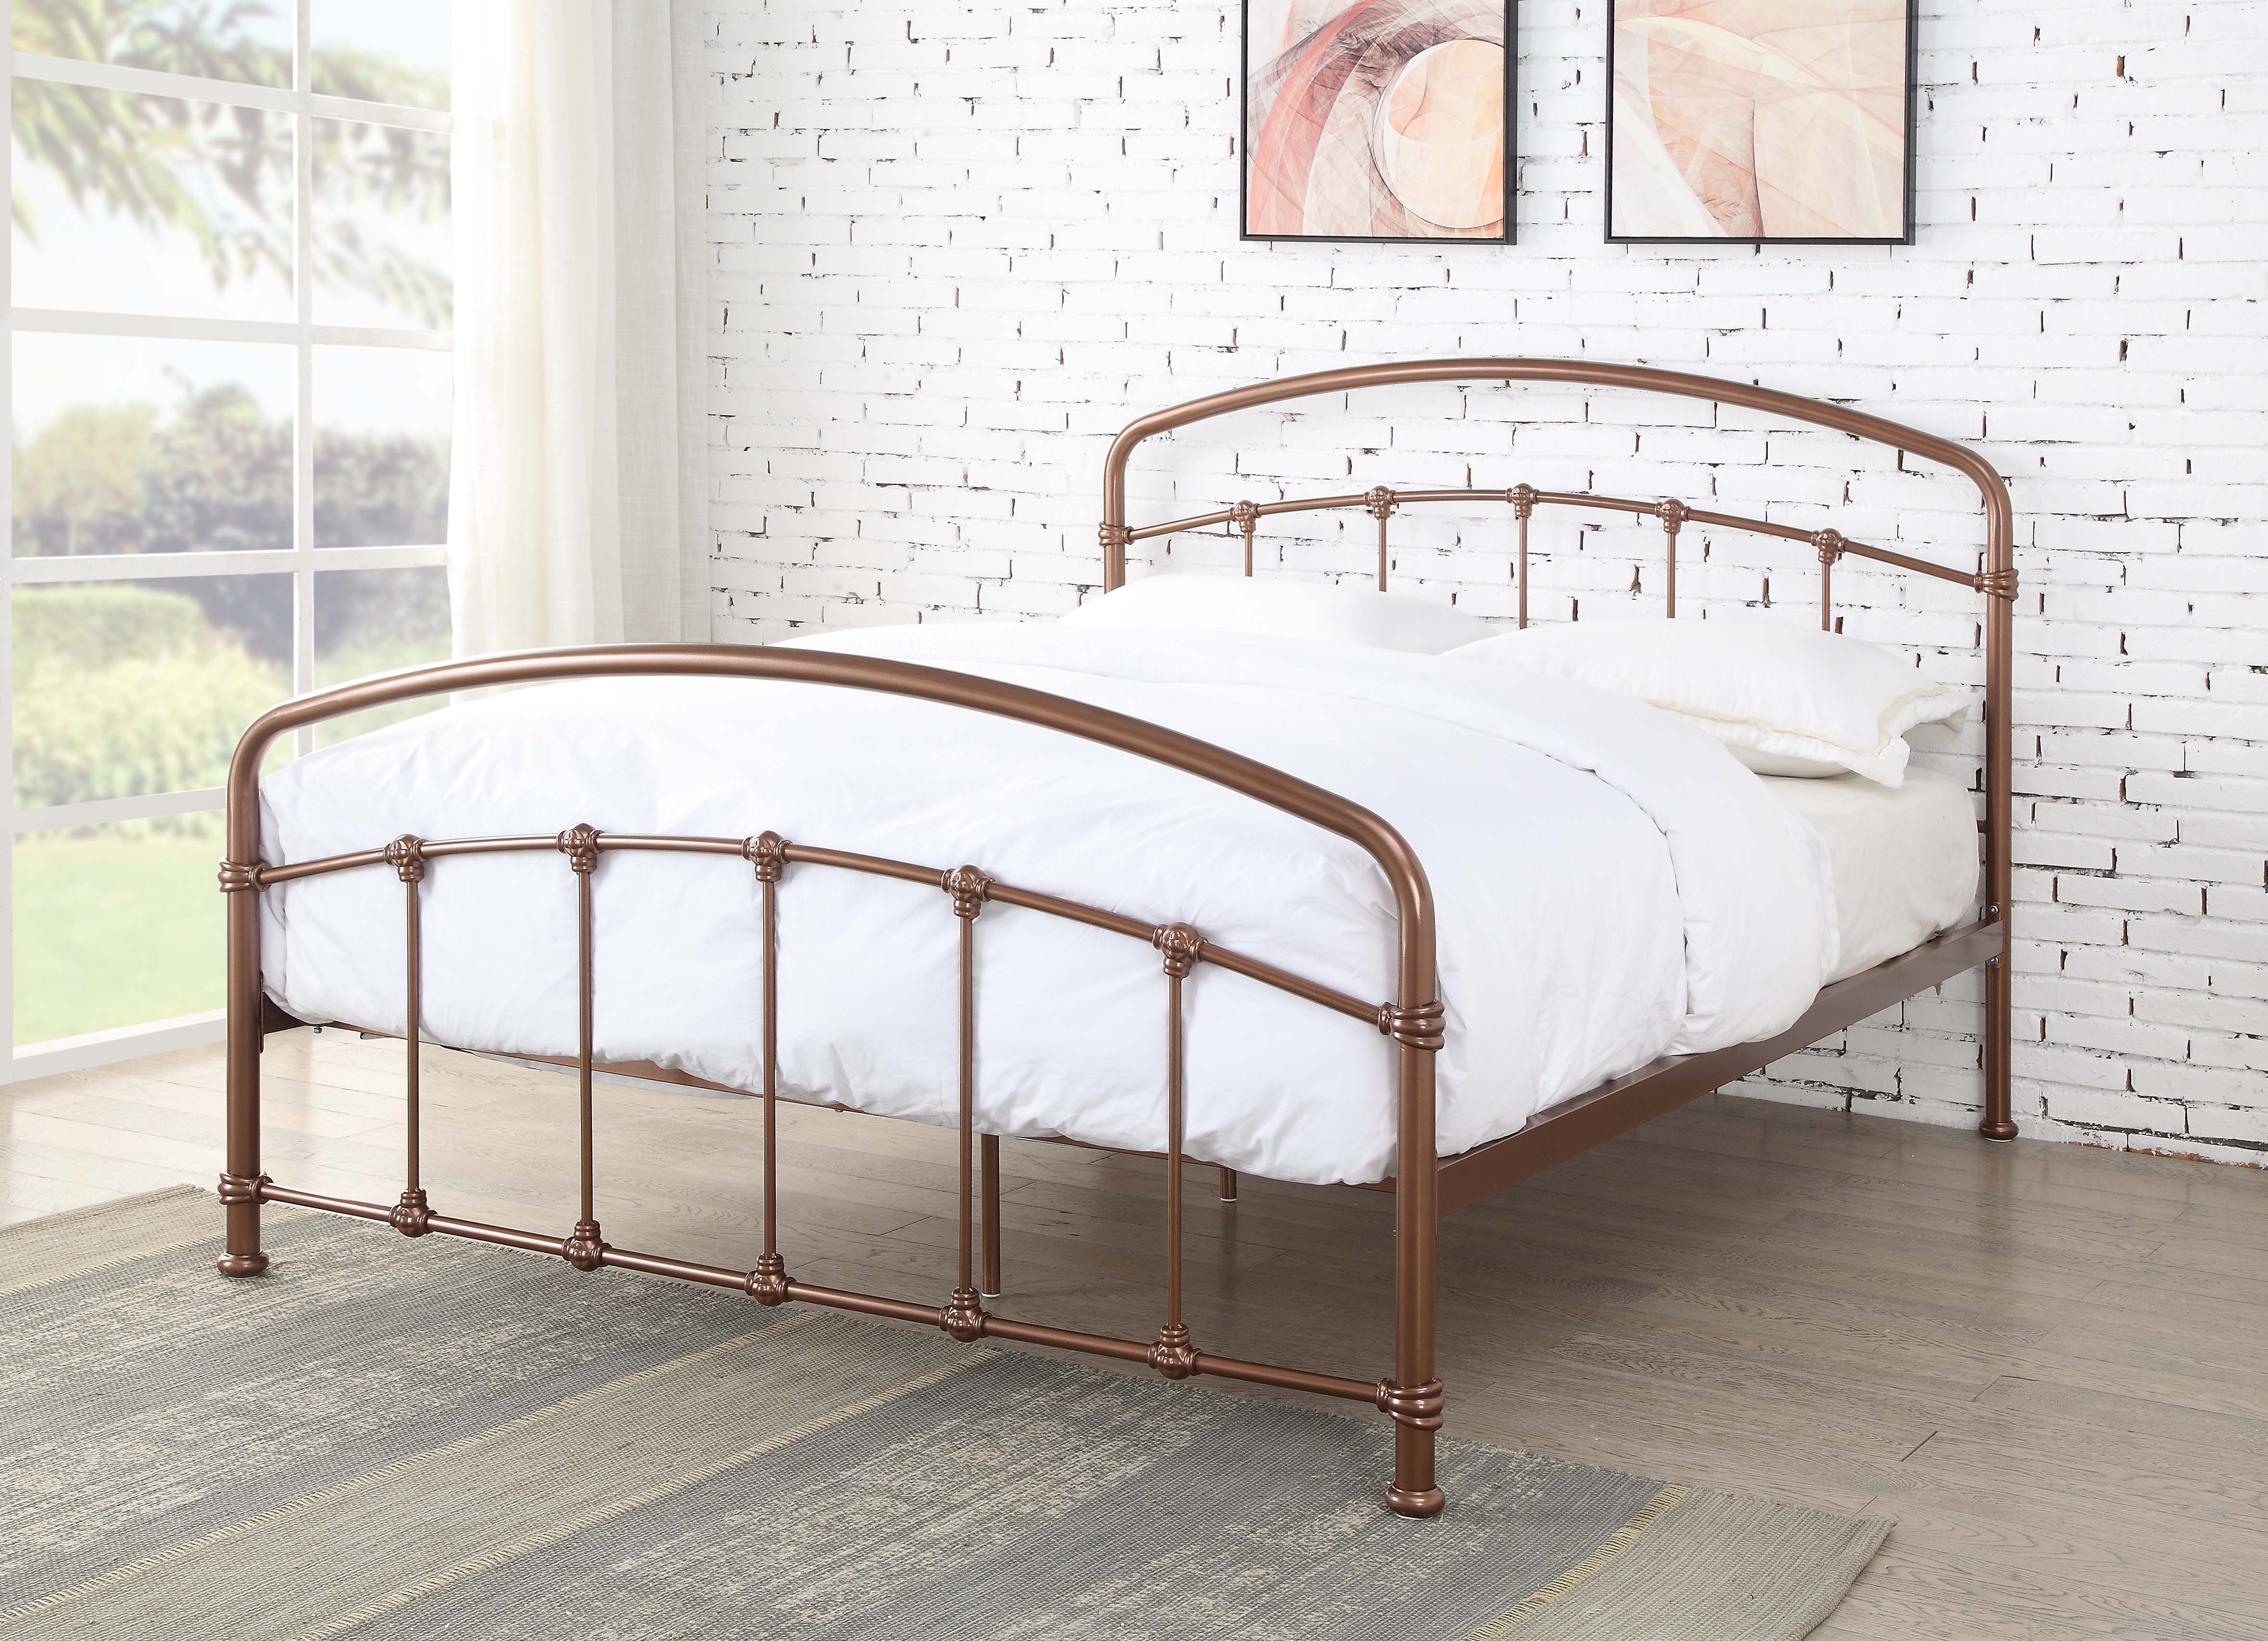 5ft King Size Retro Bed Frame Rose Gold, Rustic Industrial King Size Bed Frame